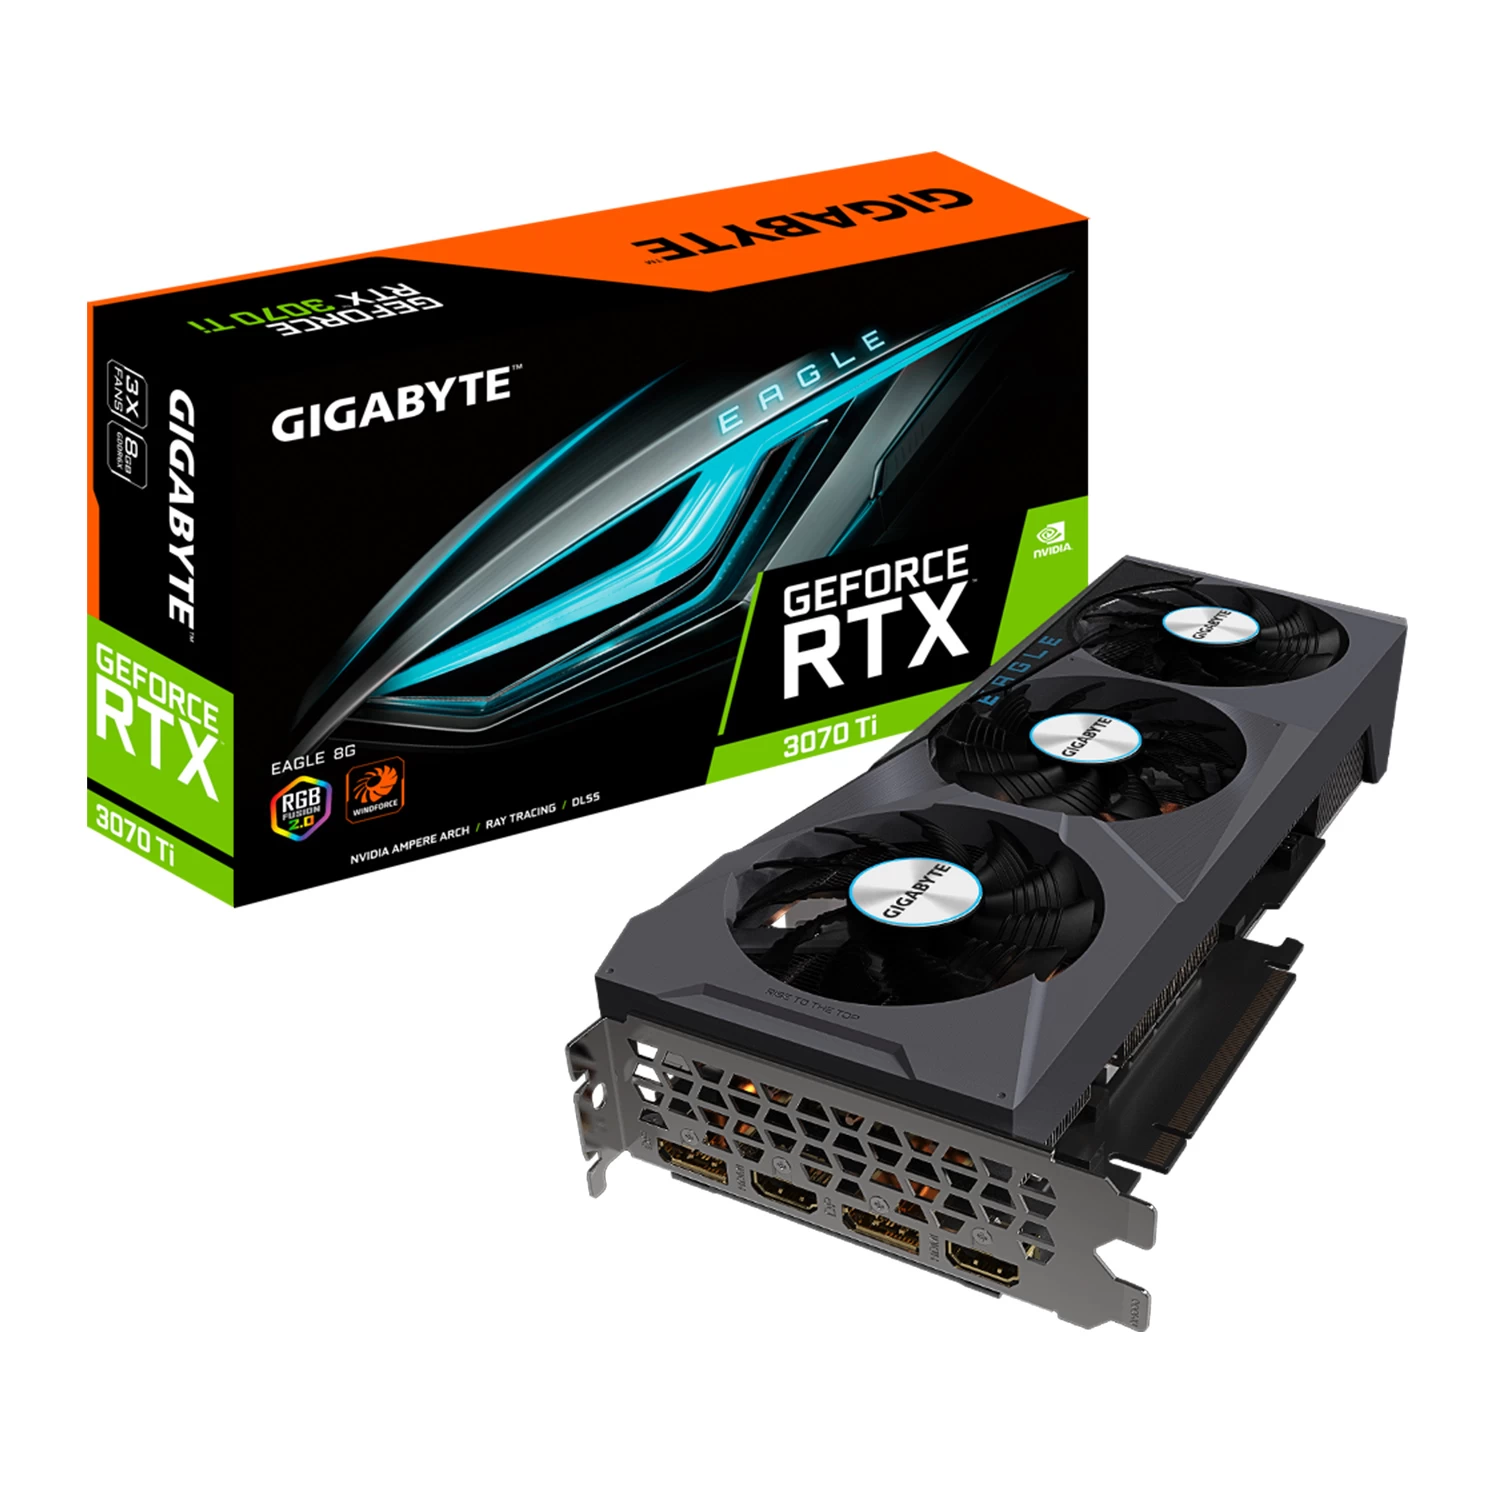 Gigabyte GeForce RTX 3070 Ti EAGLE 8G Package